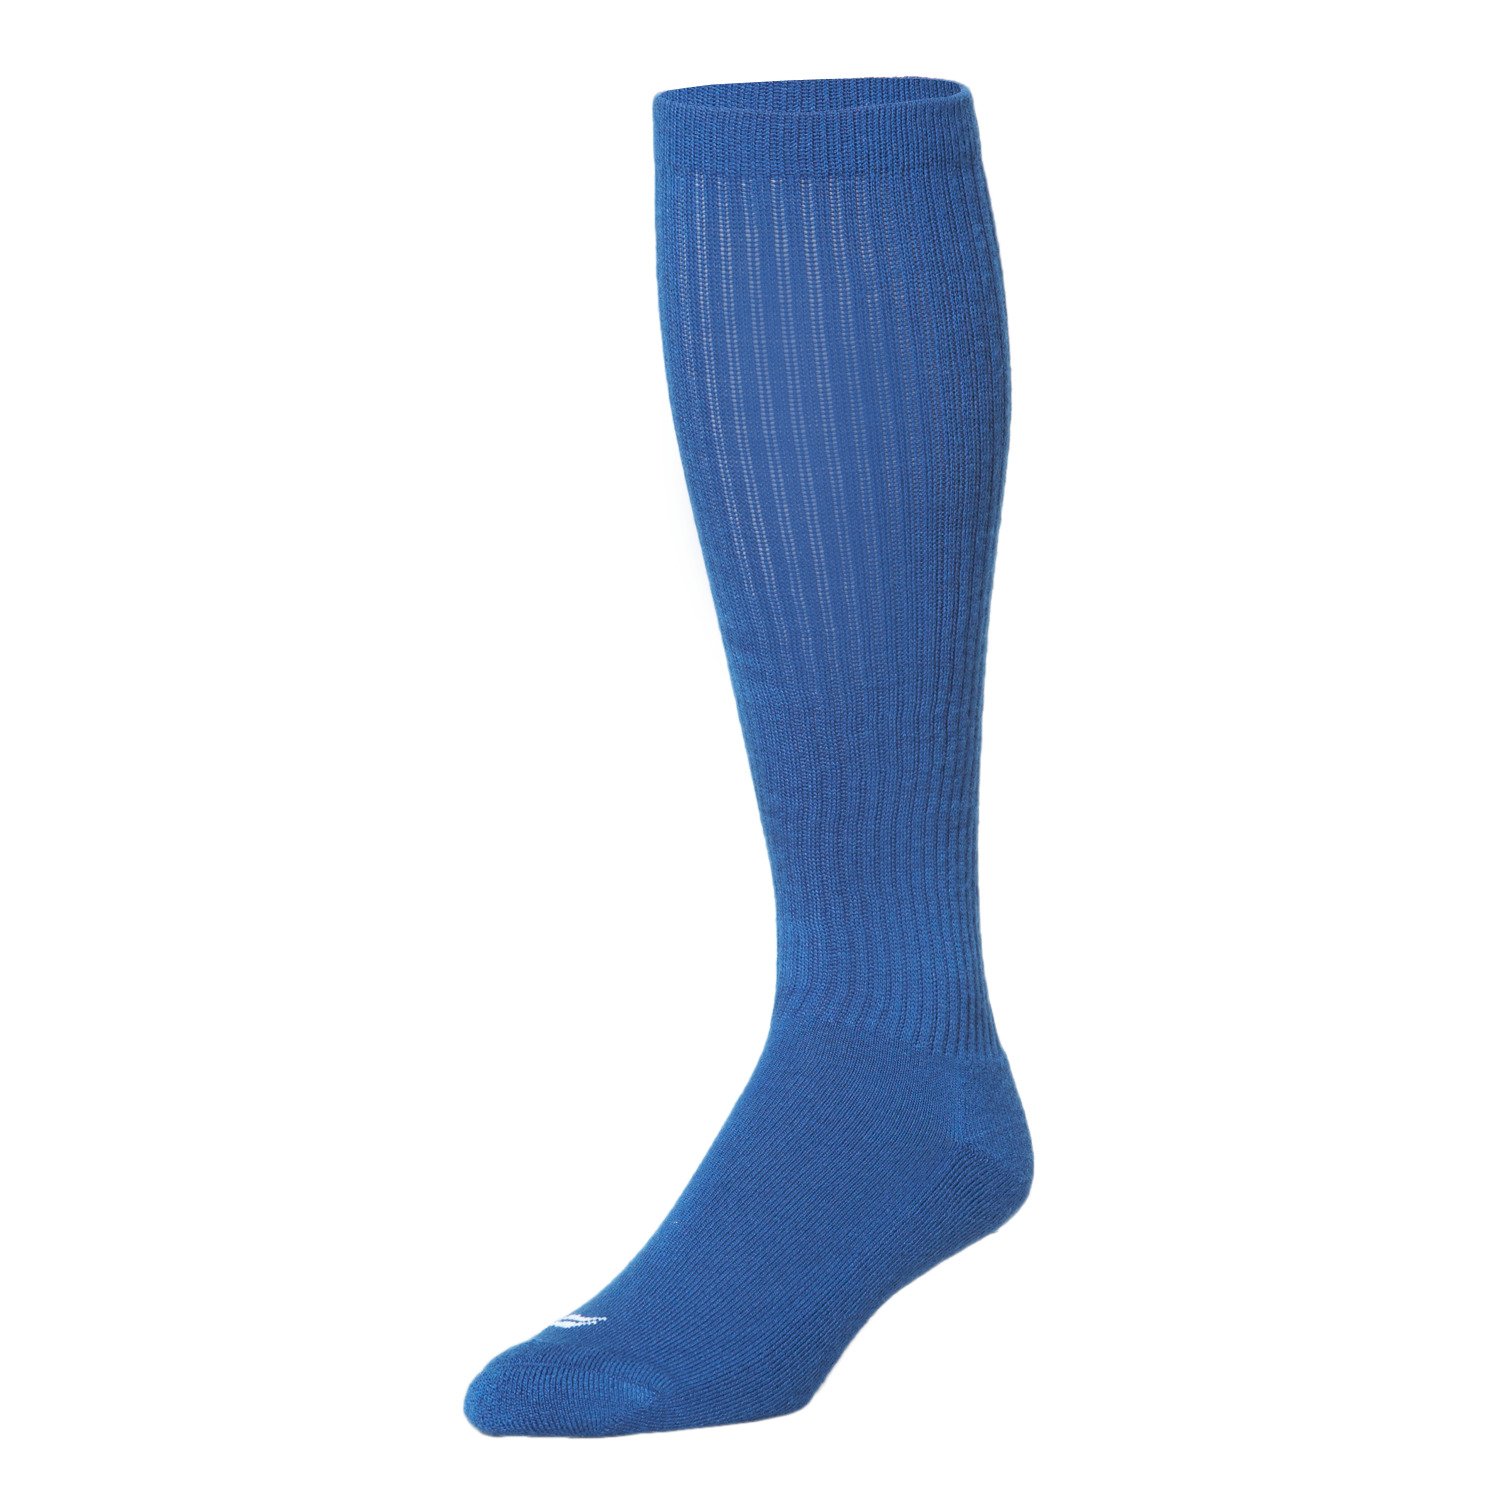 Sof Sole Soccer Adults Performance Socks Medium 2 Pack